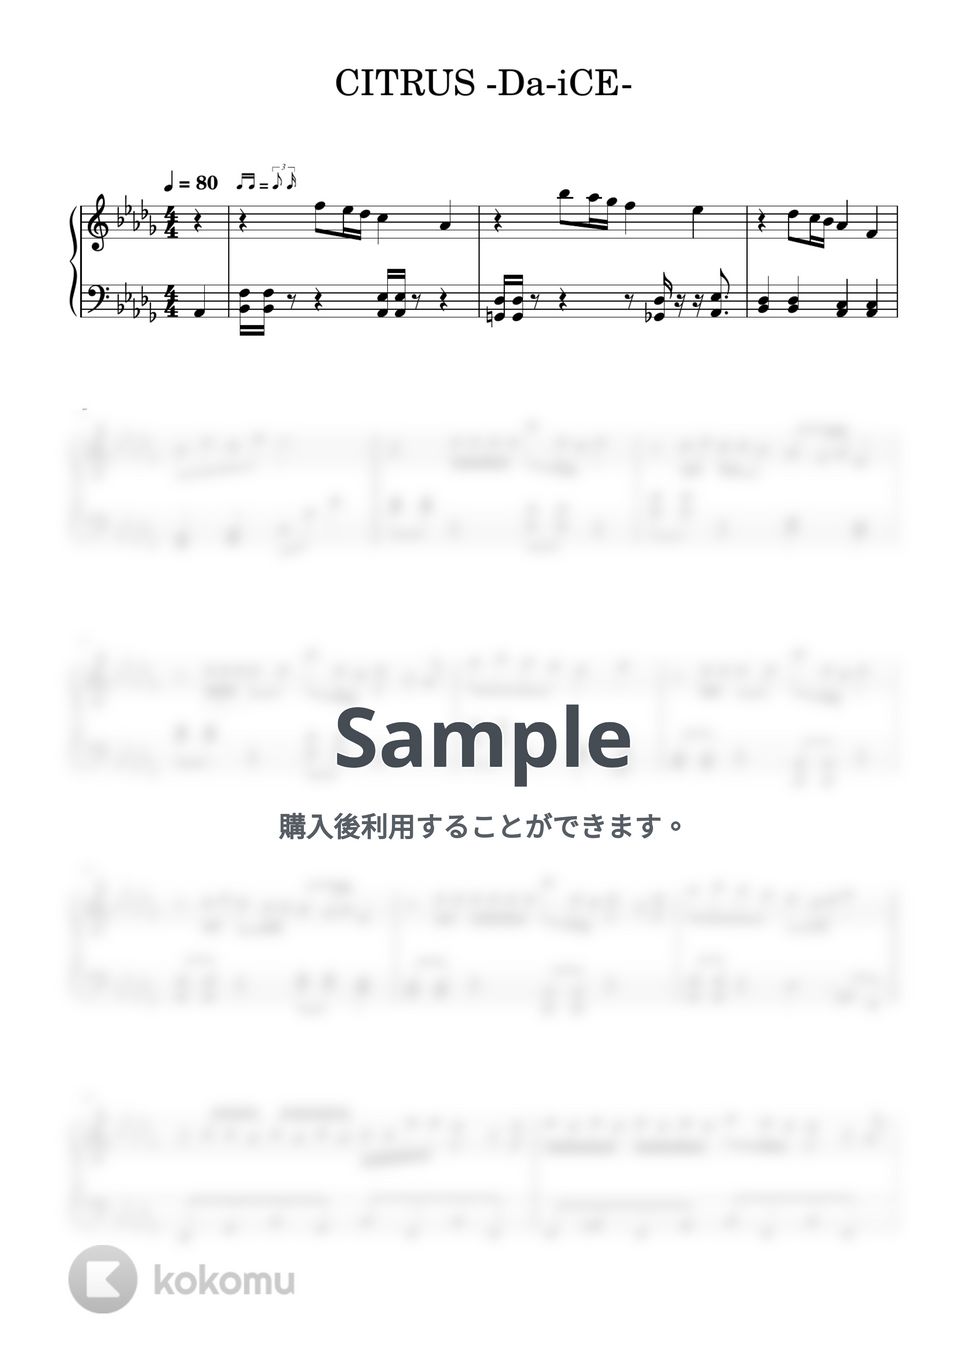 Da-iCE - CITRUS (ピアノ初心者向け / short ver.) by Piano Lovers. jp